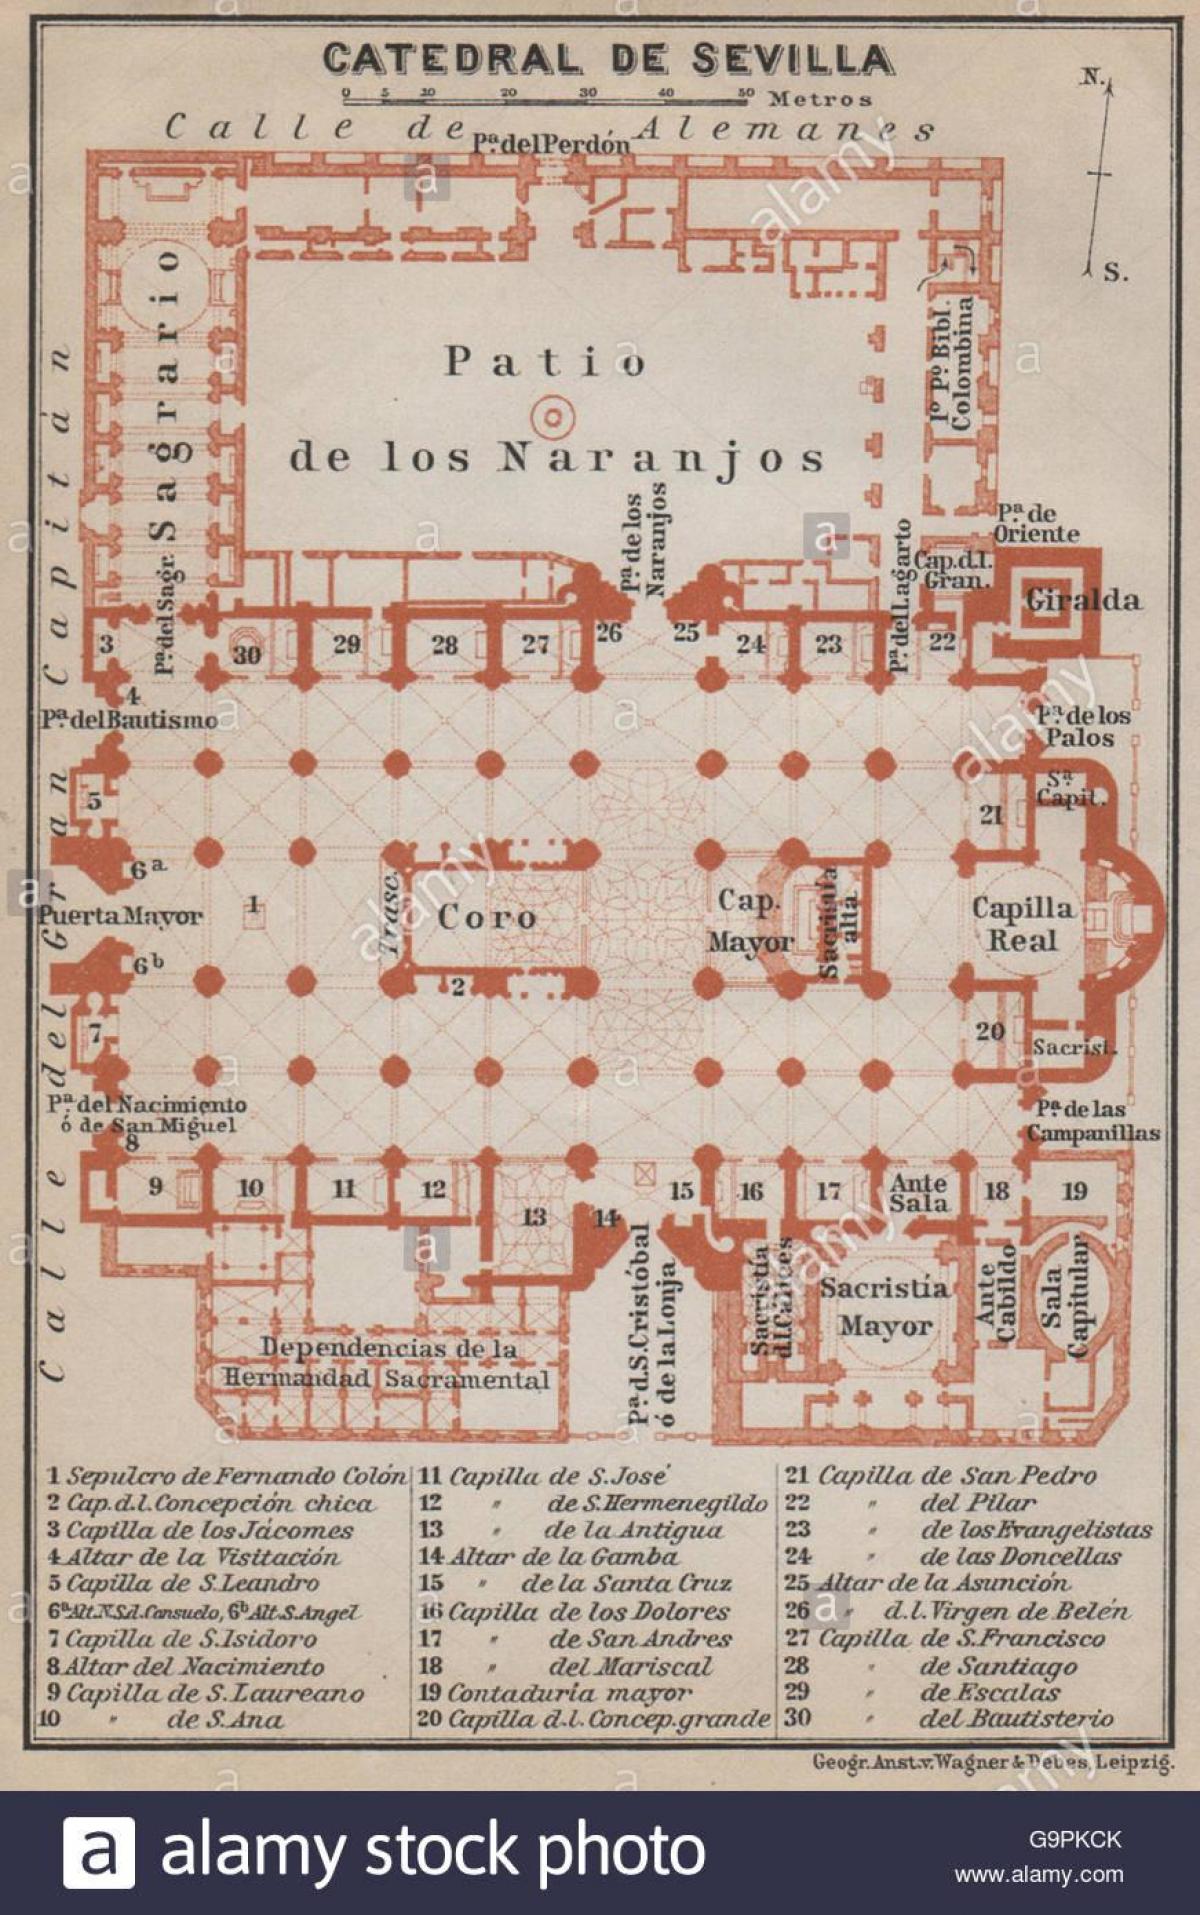 mapa Sevilla cathedral